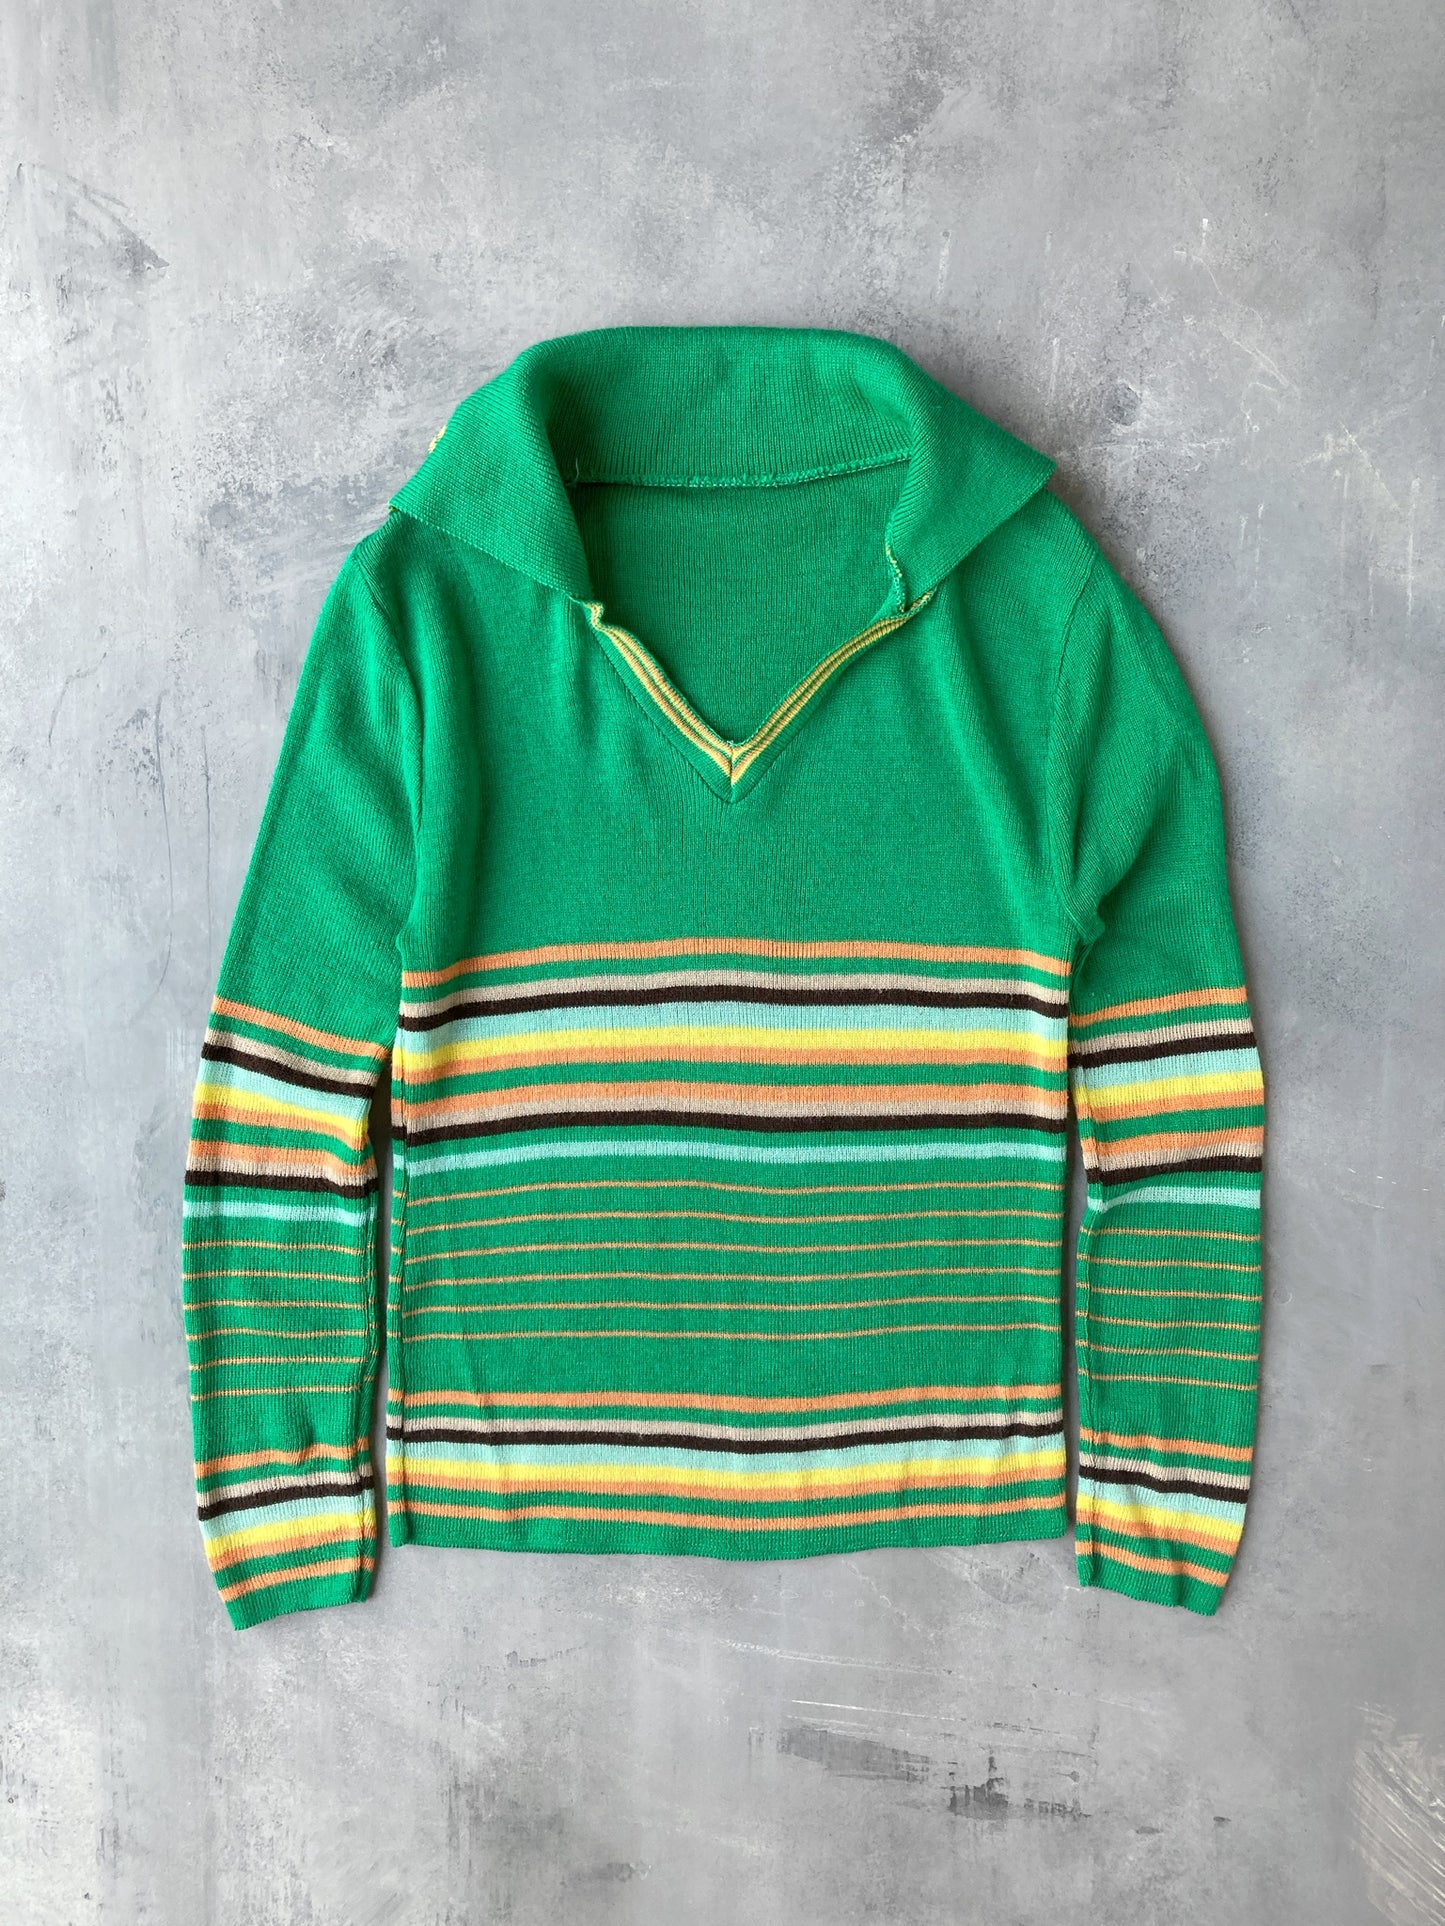 Collared Striped Sweater 70's - Small